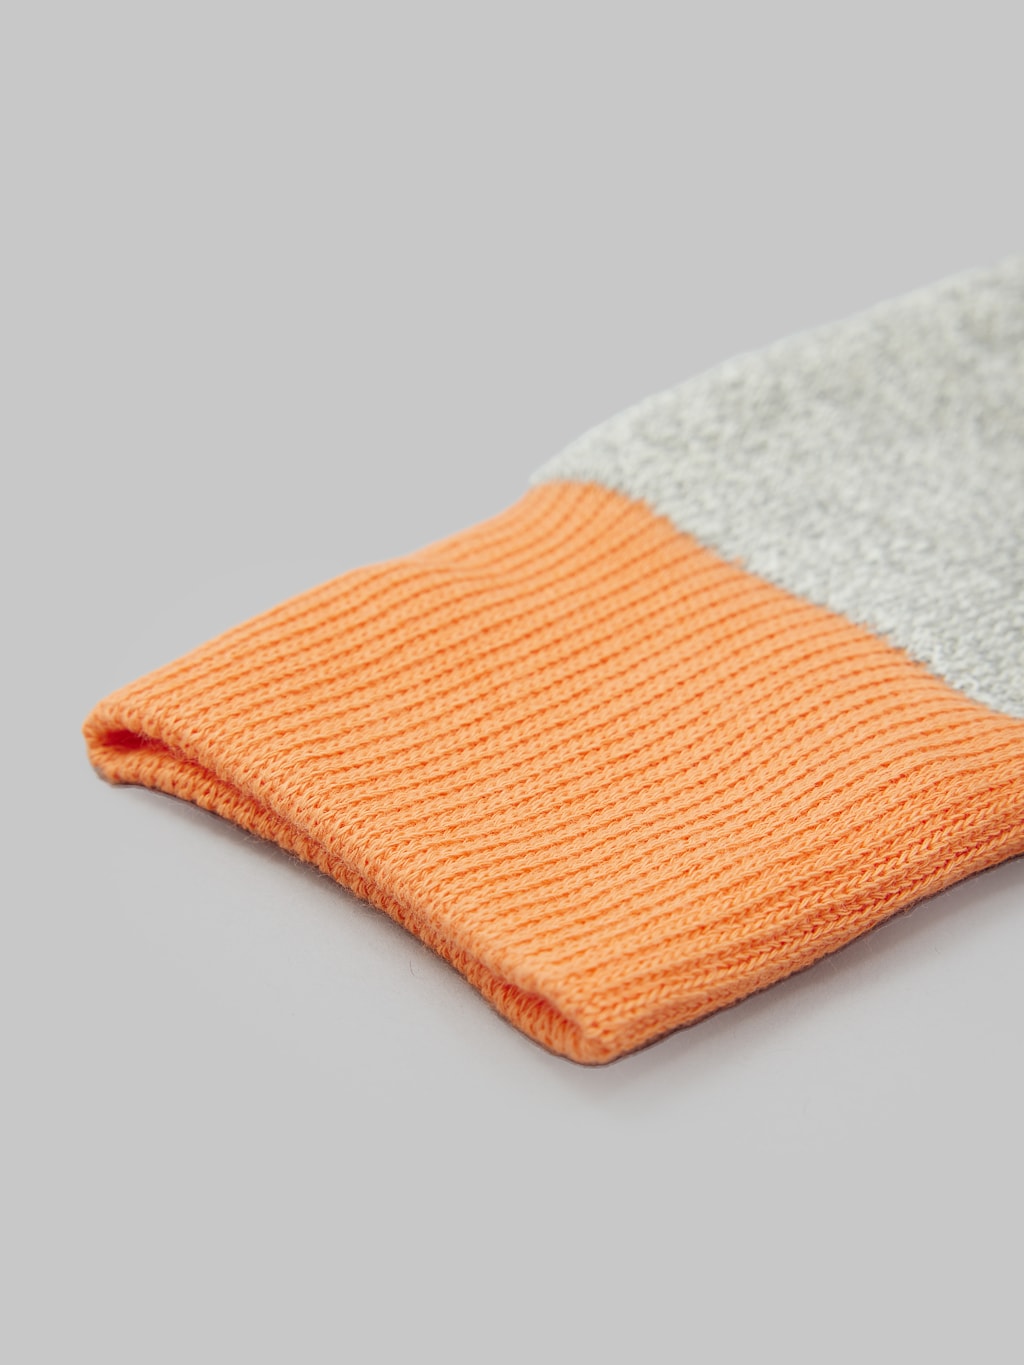 rototo double face crew socks silk cotton orange gray elastic band